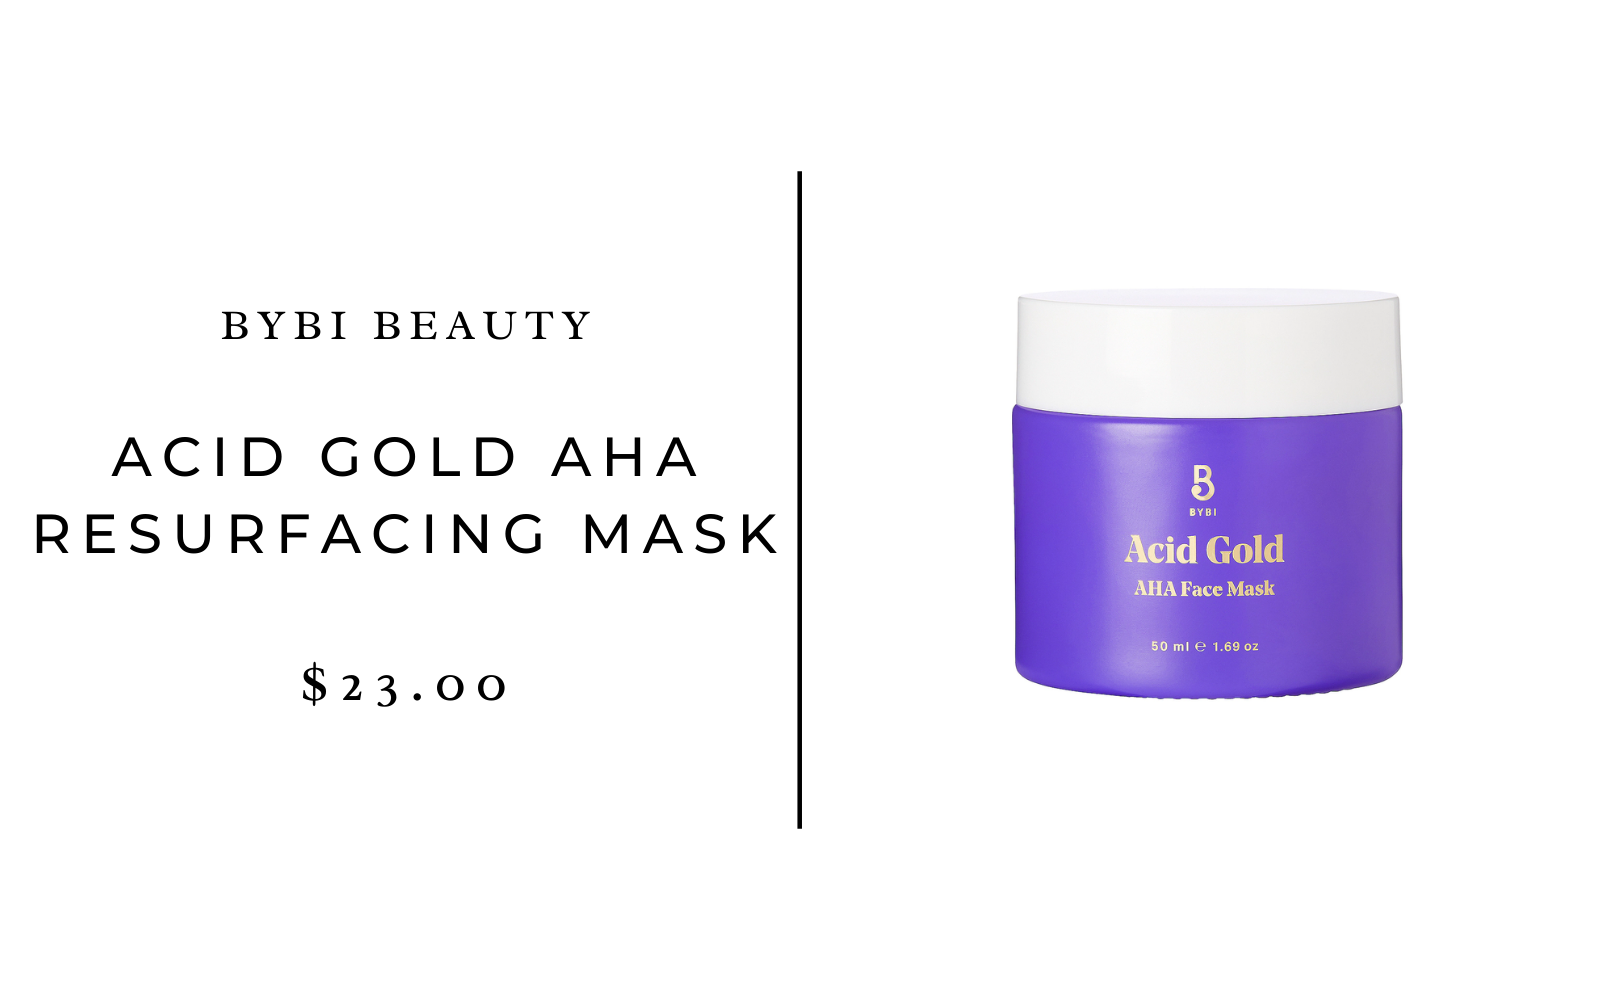 BYBI Beauty Acid Gold AHA Resurfacing Mask